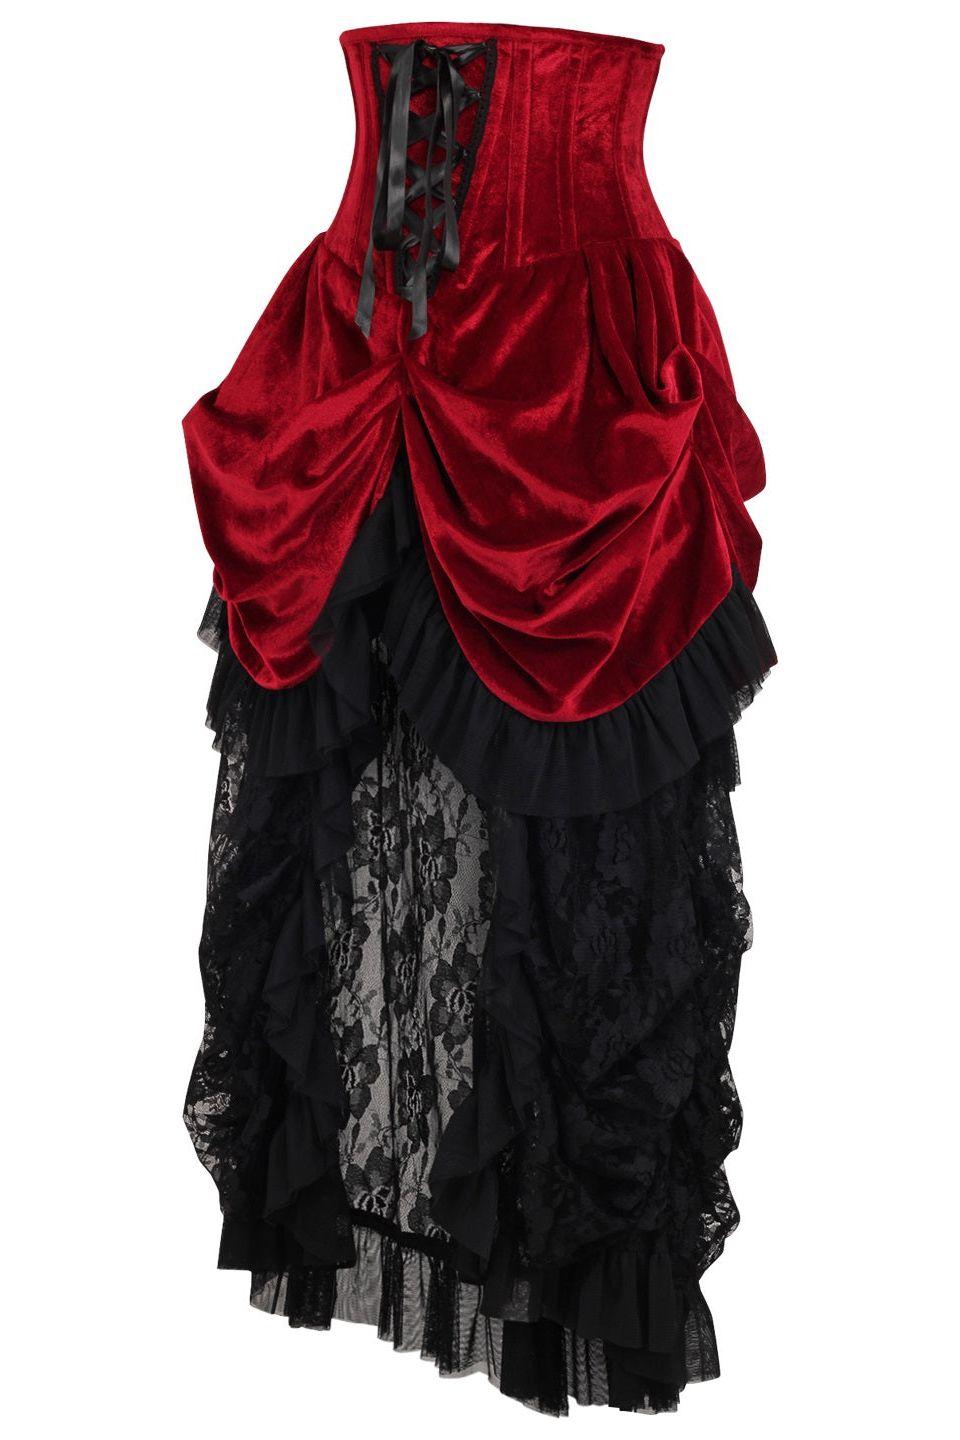 Top Drawer Steel Boned Dark Red Velvet Victorian Bustle Underbust Corset Dress - AMIClubwear